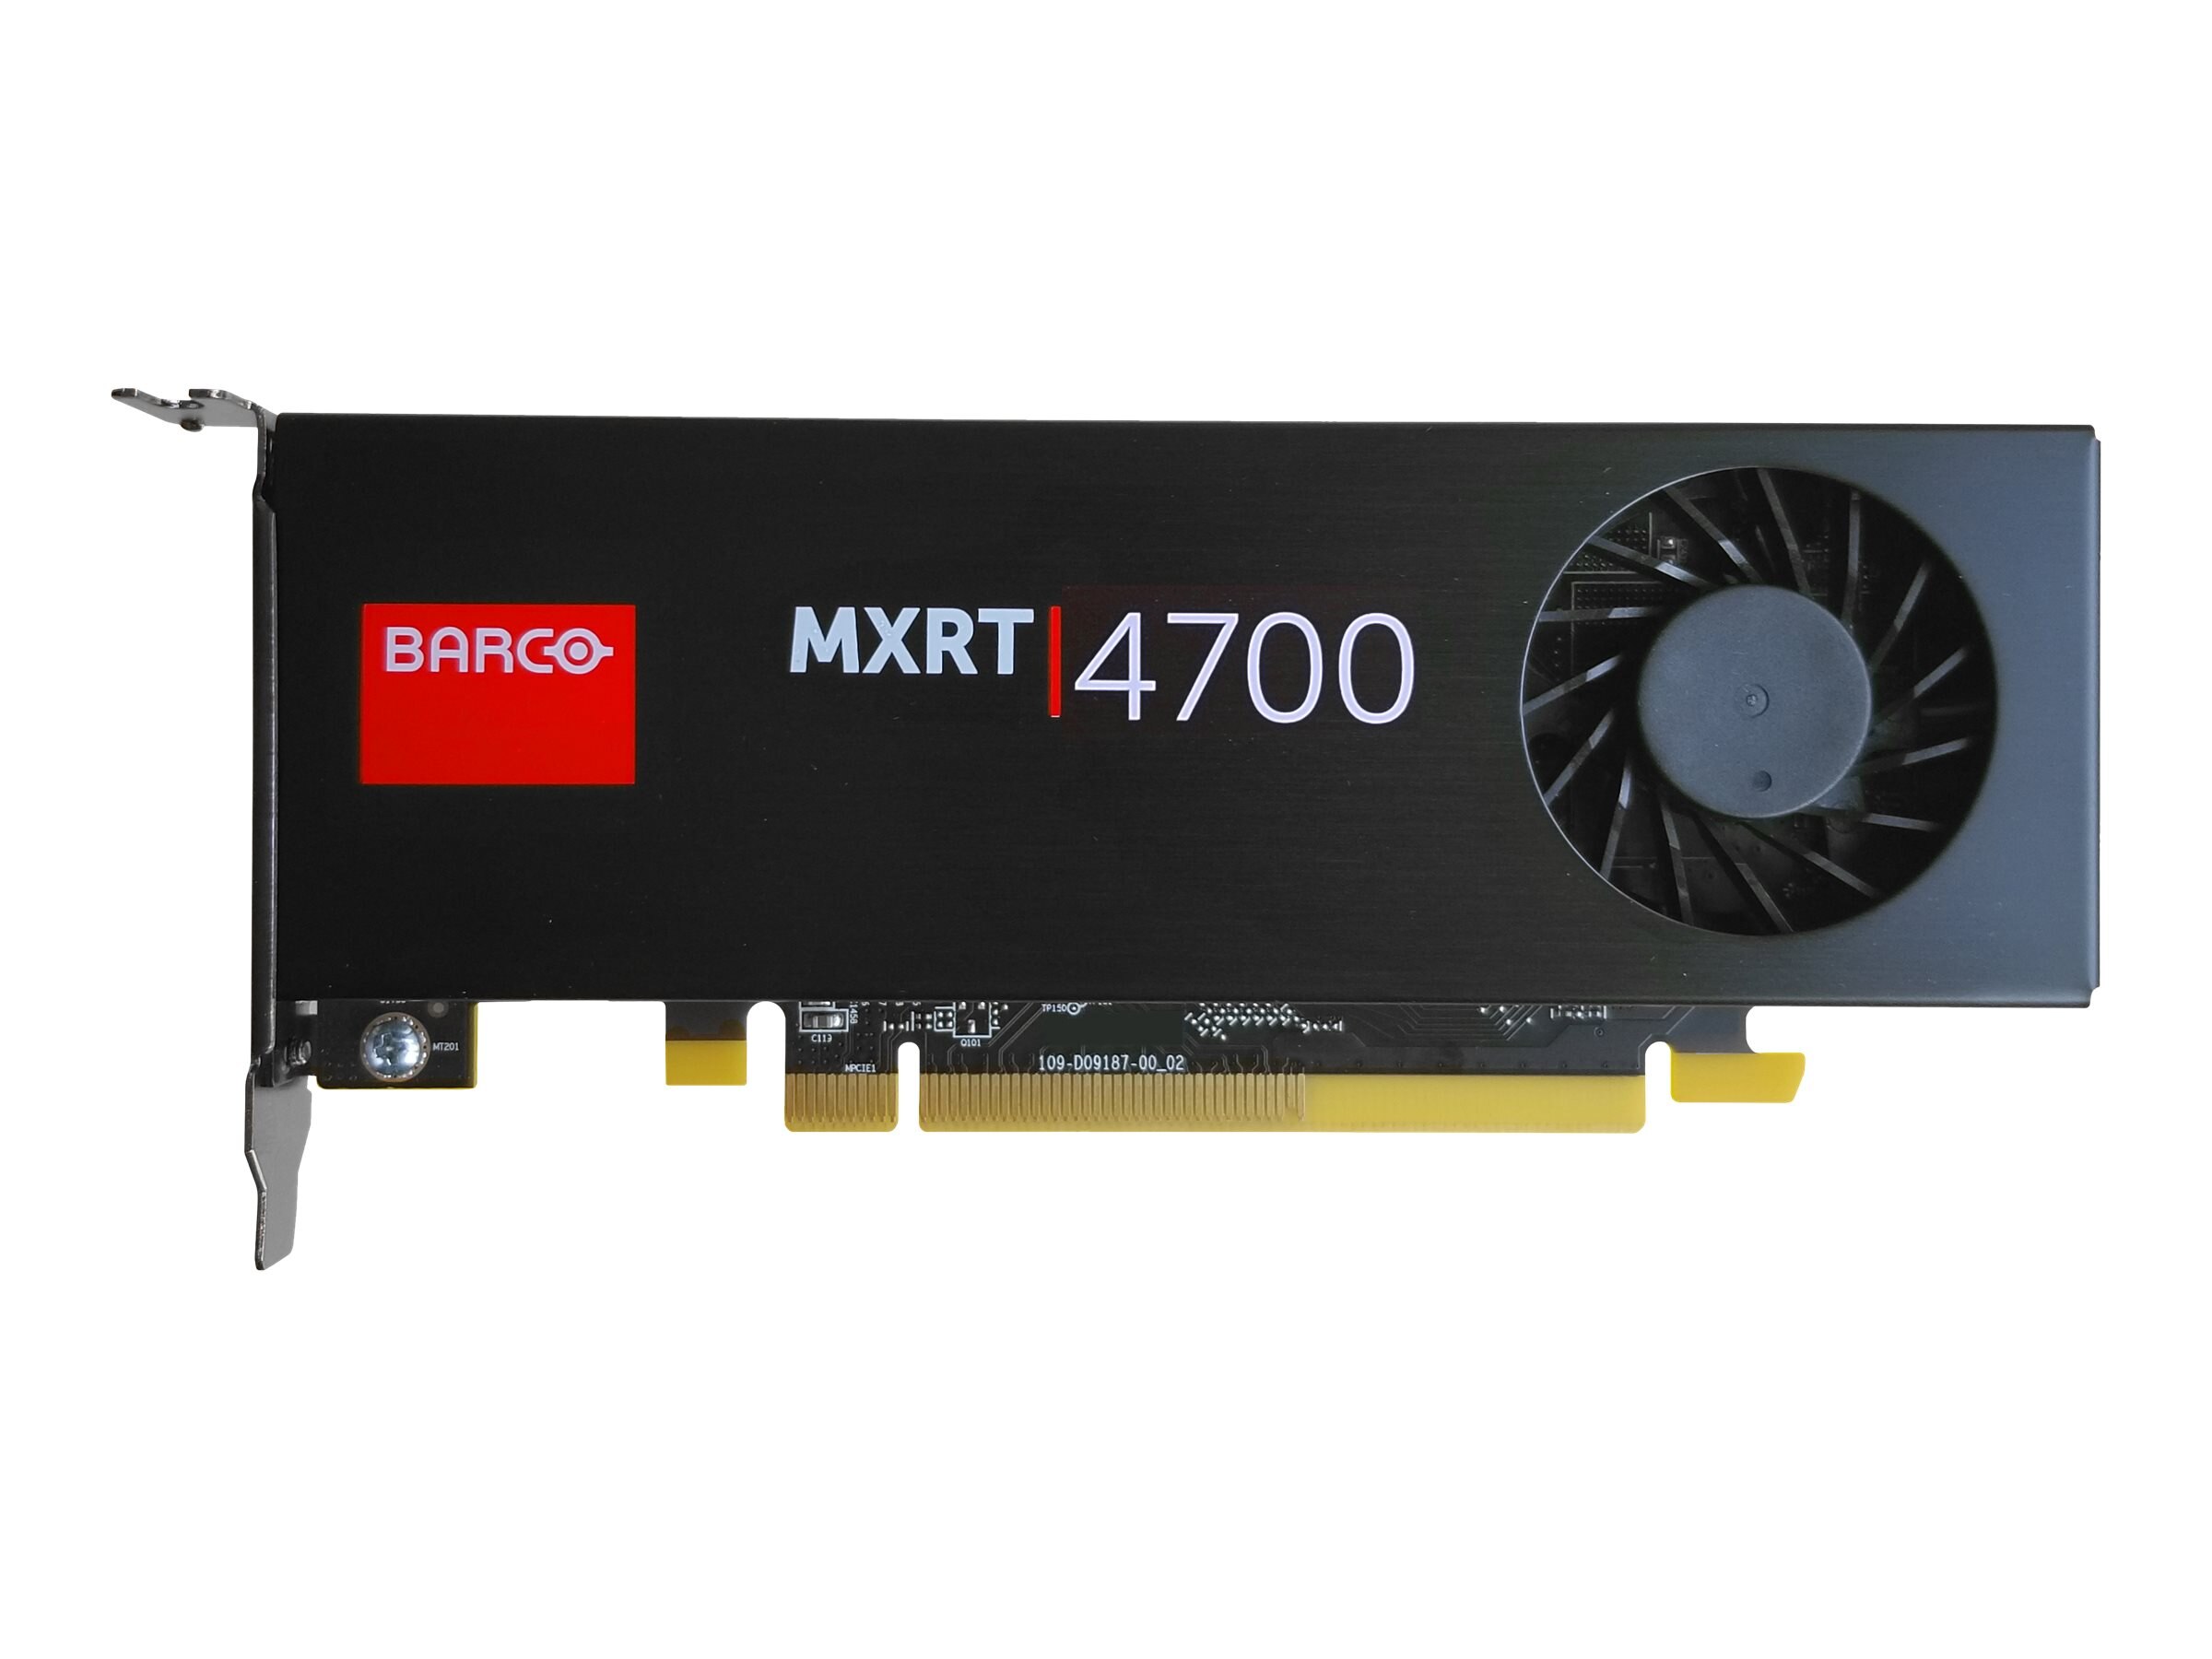 Barco MXRT-4700 PCIe 3.0 x8 Graphics Card, 4GB GDDR5 (K9306046)